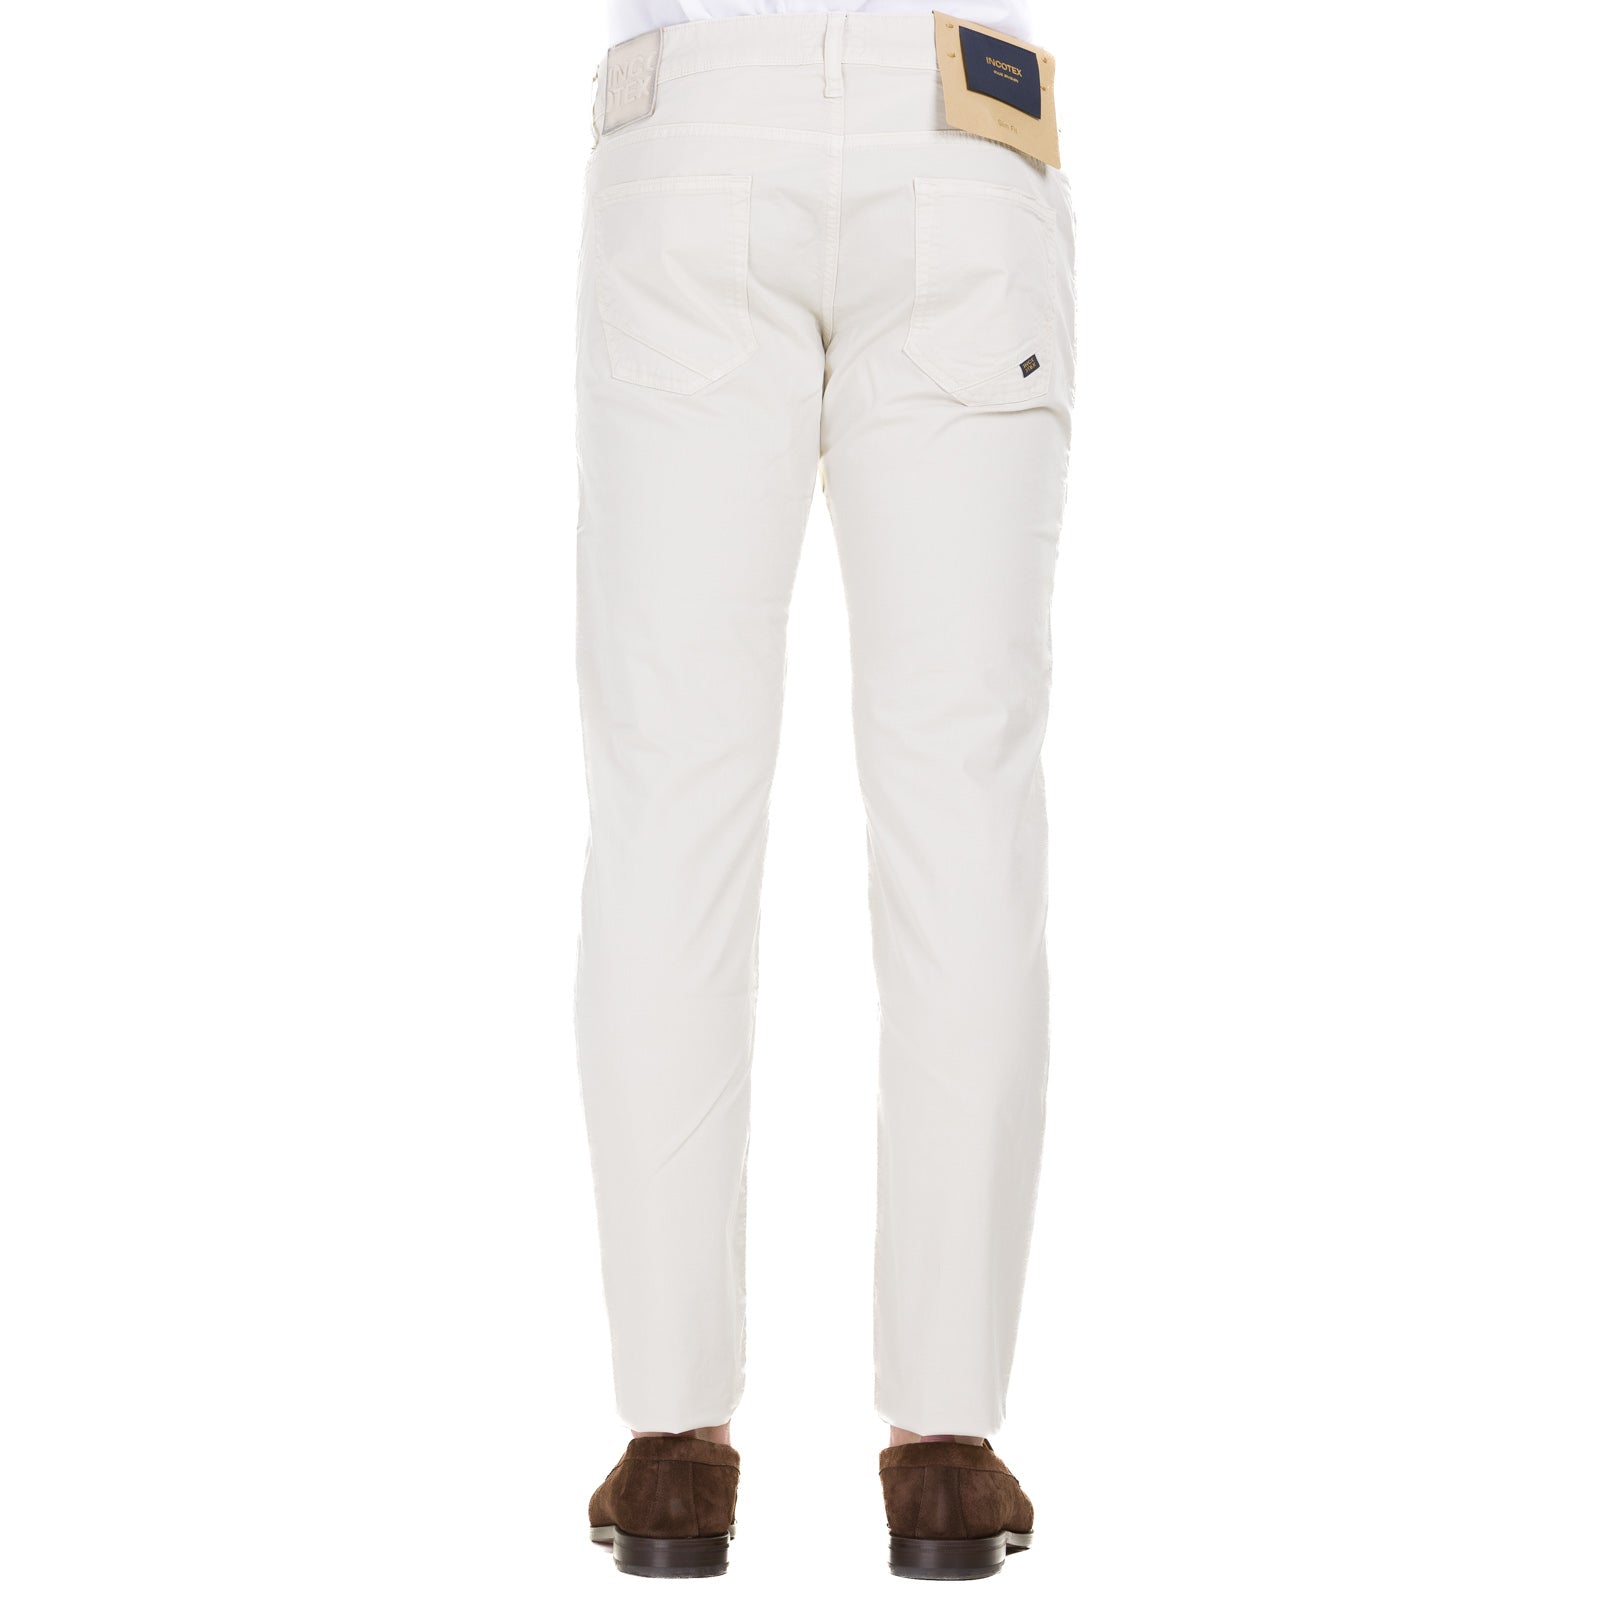 Pantalone INCOTEX 114 BDPS0002-06510 Bianco sporco - Avant-gardeandria